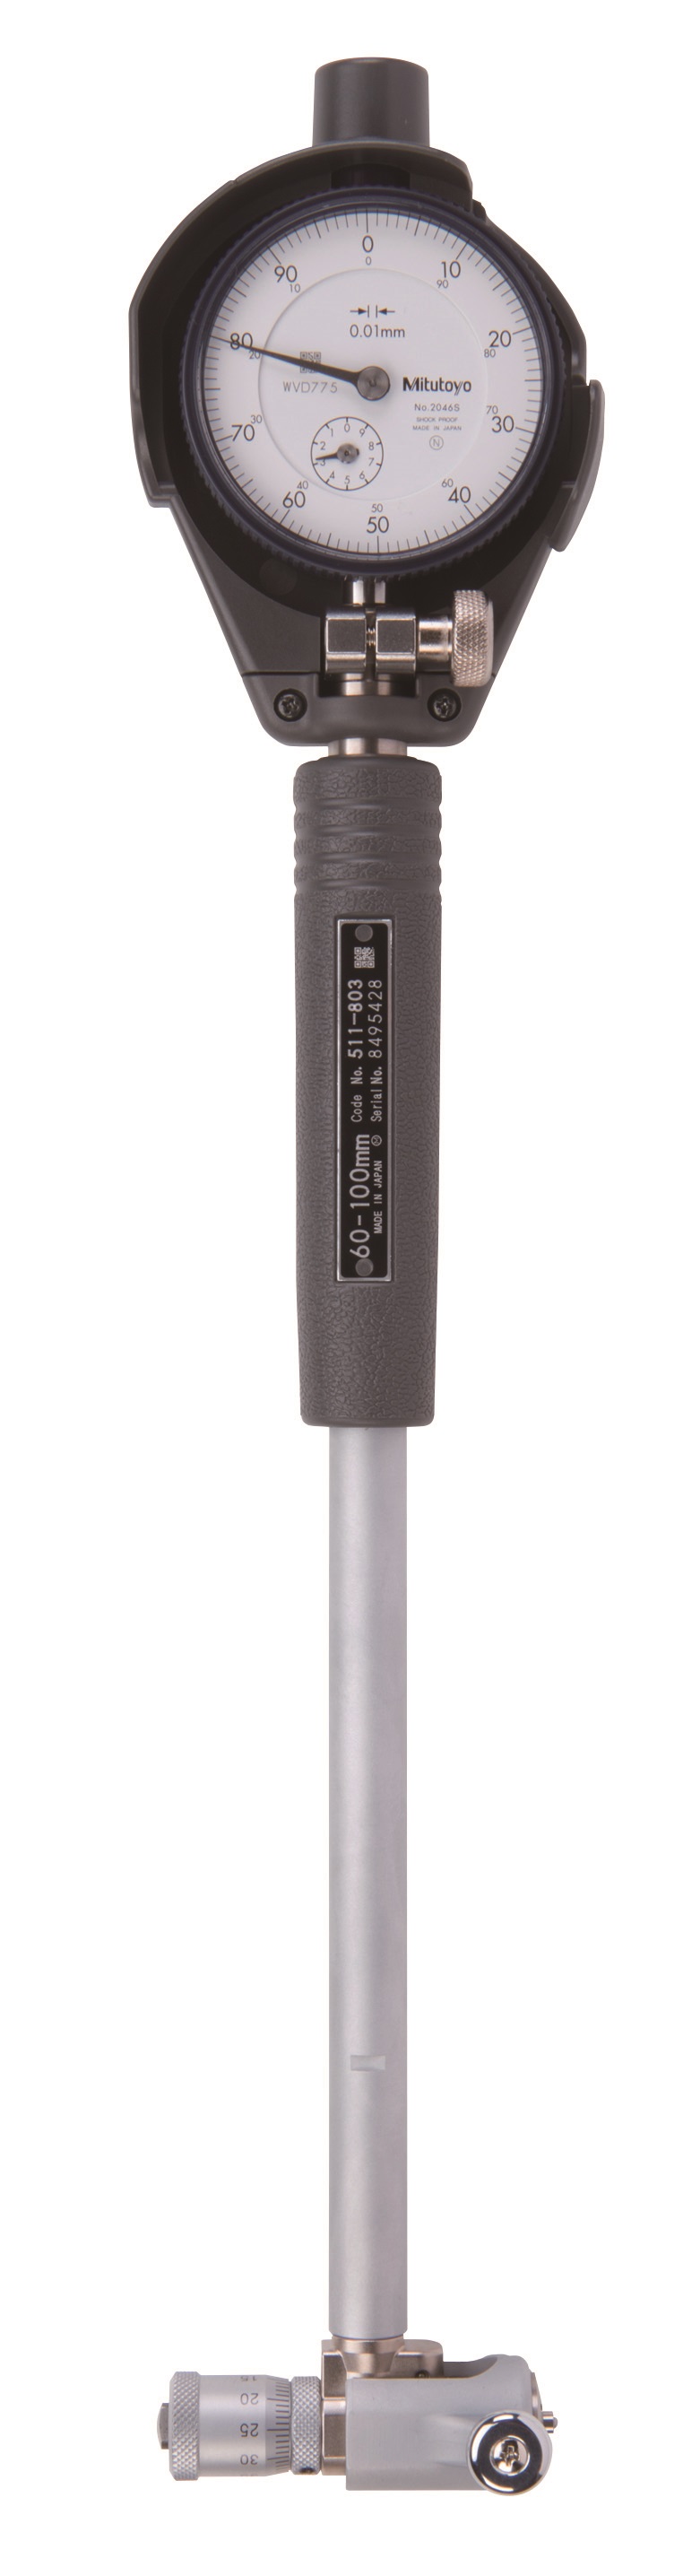 511 Series, Cylinder Gauge with Micrometer Head CGM-X